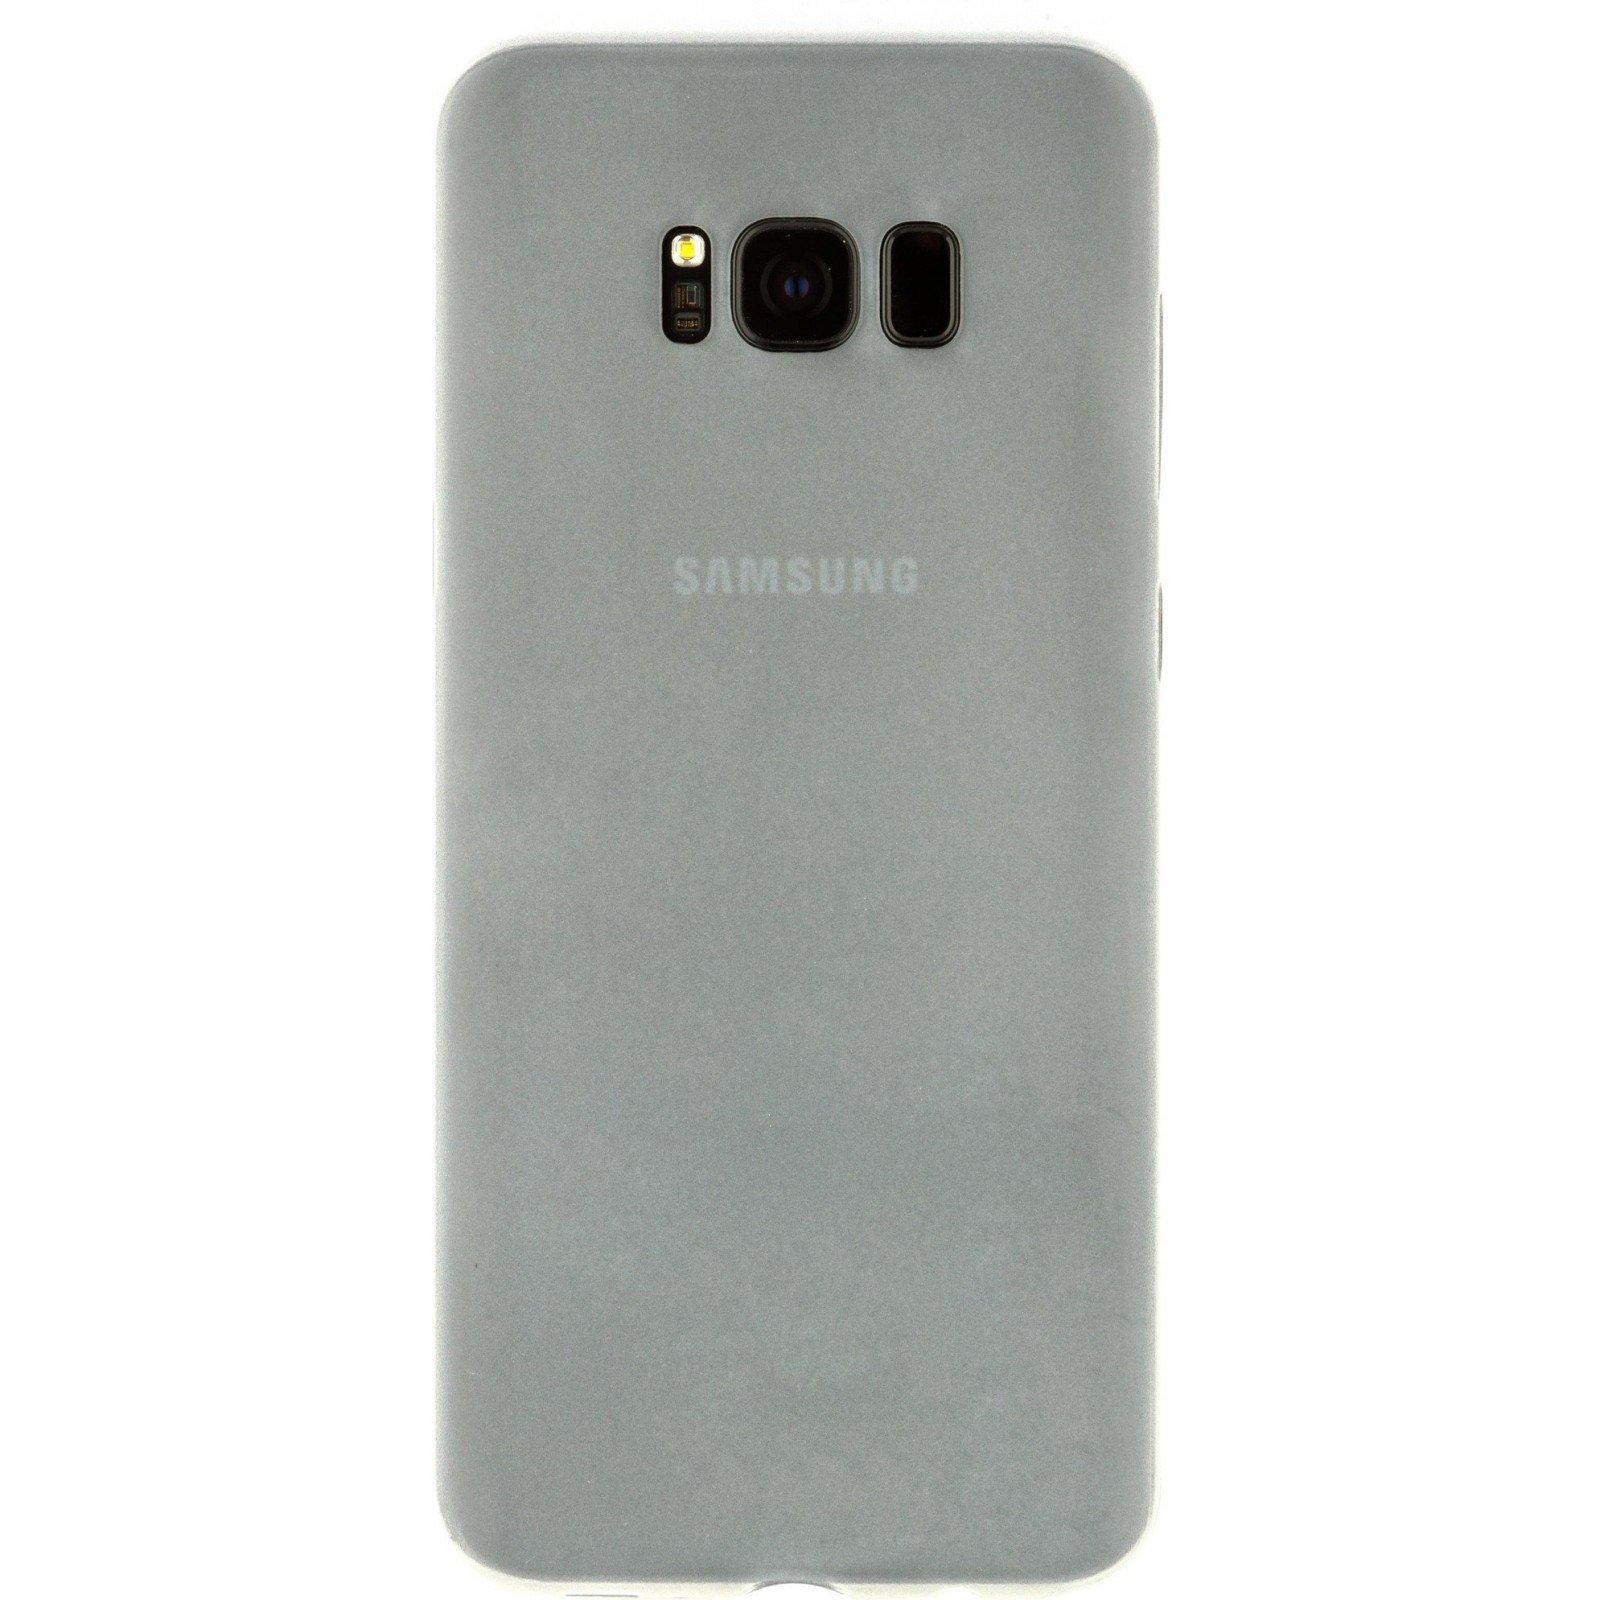 Чохол до мобільного телефона MakeFuture PP/Ice Case для Samsung S8 Plus White (MCI-SS8PW)